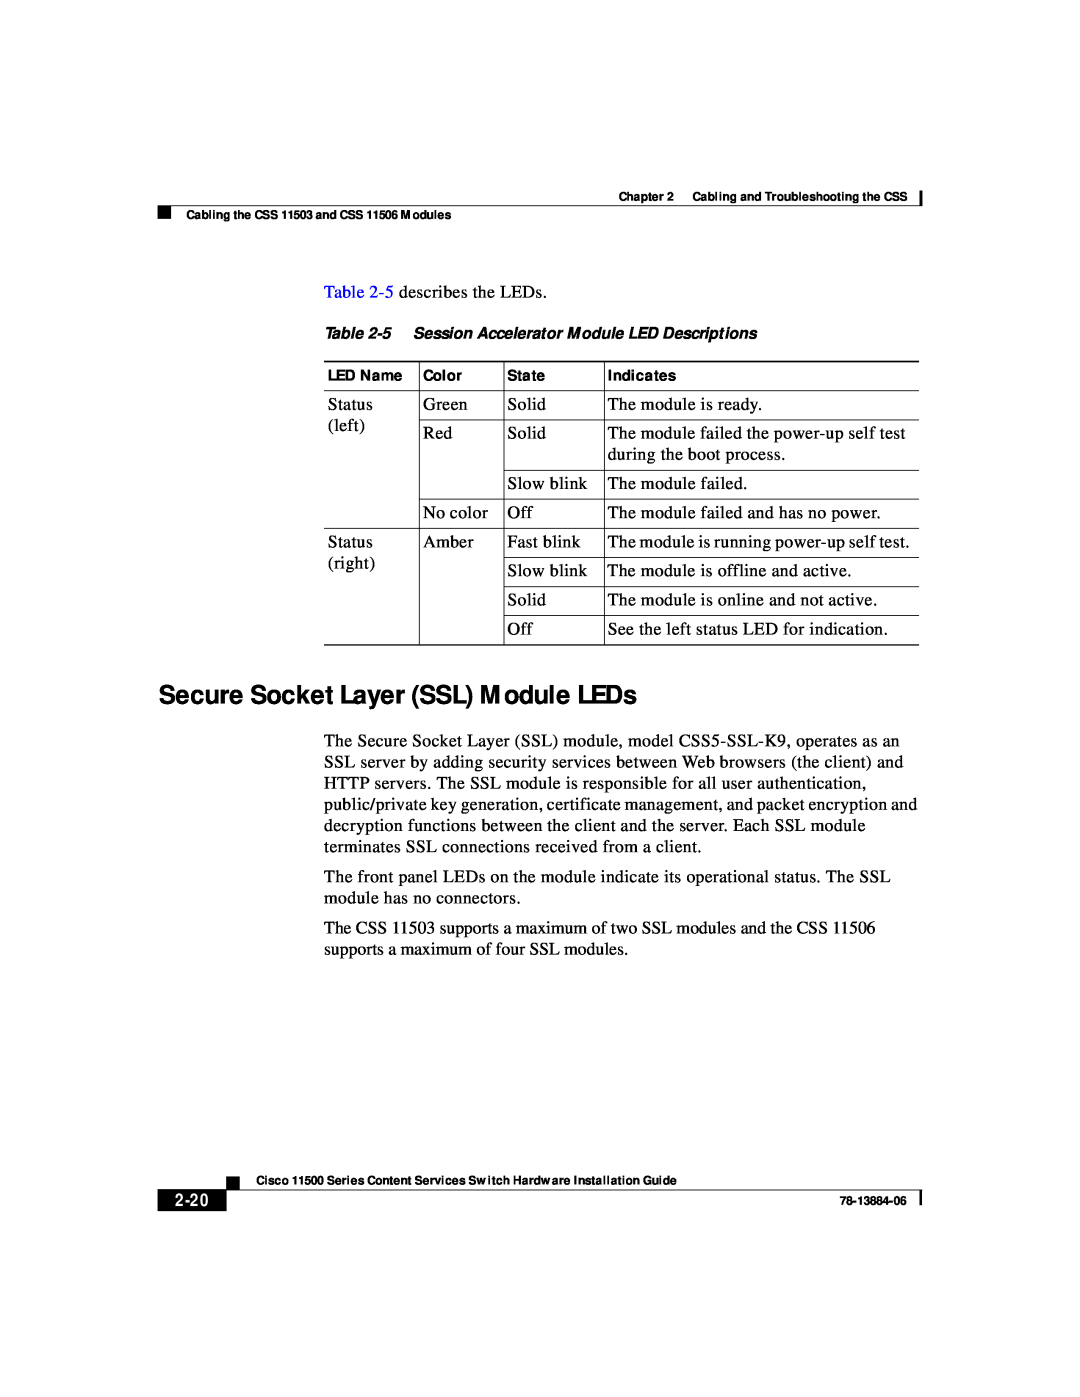 Cisco Systems 11500 Series manual Secure Socket Layer SSL Module LEDs, 2-20, 5 Session Accelerator Module LED Descriptions 